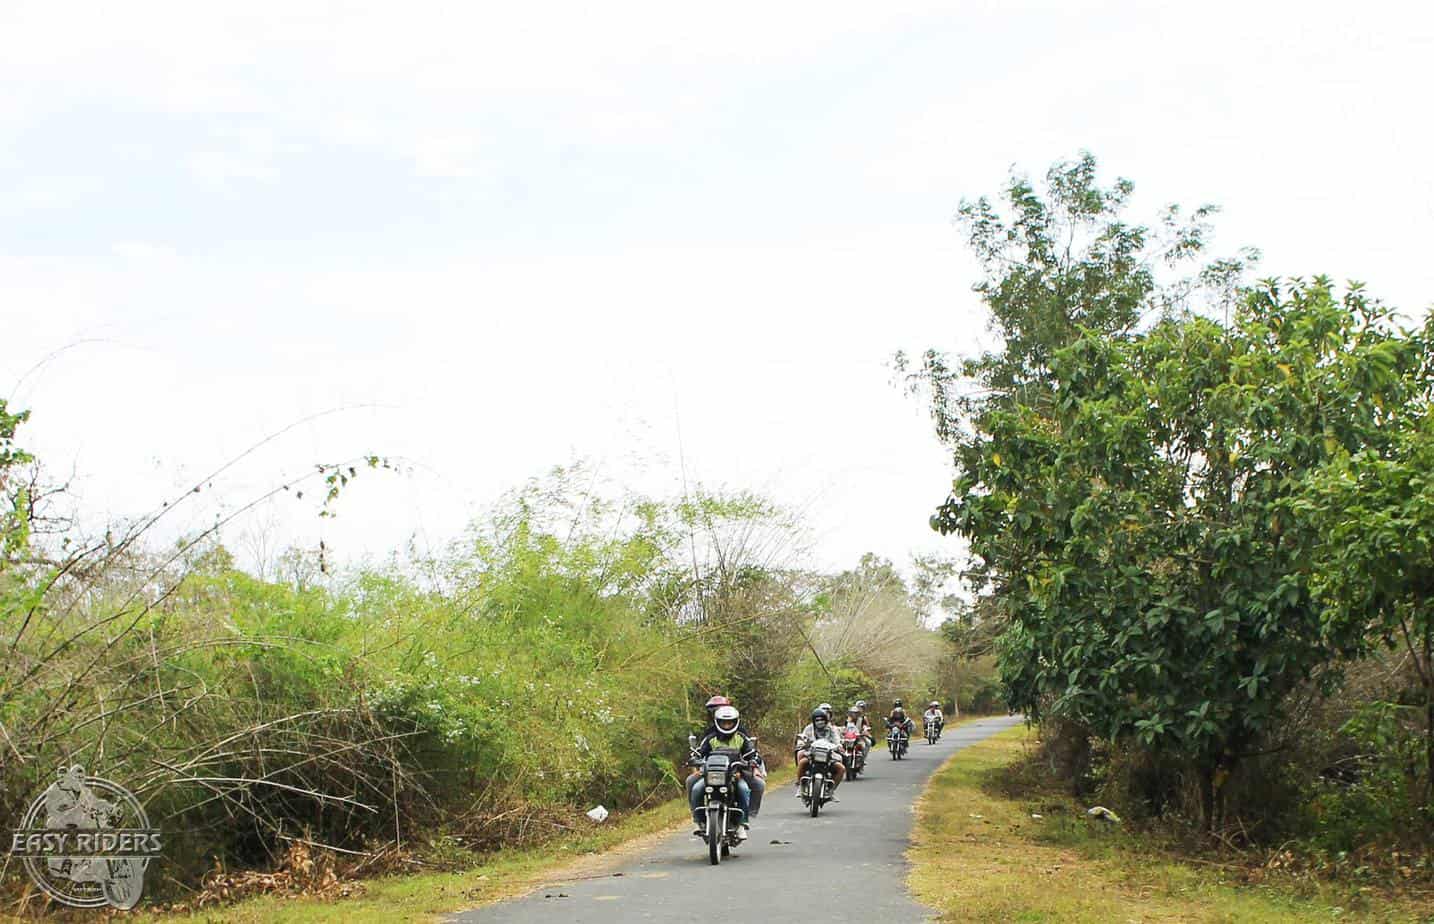 Day 5: Kon Tum – Kham Duc (160 km – 6 hours riding)